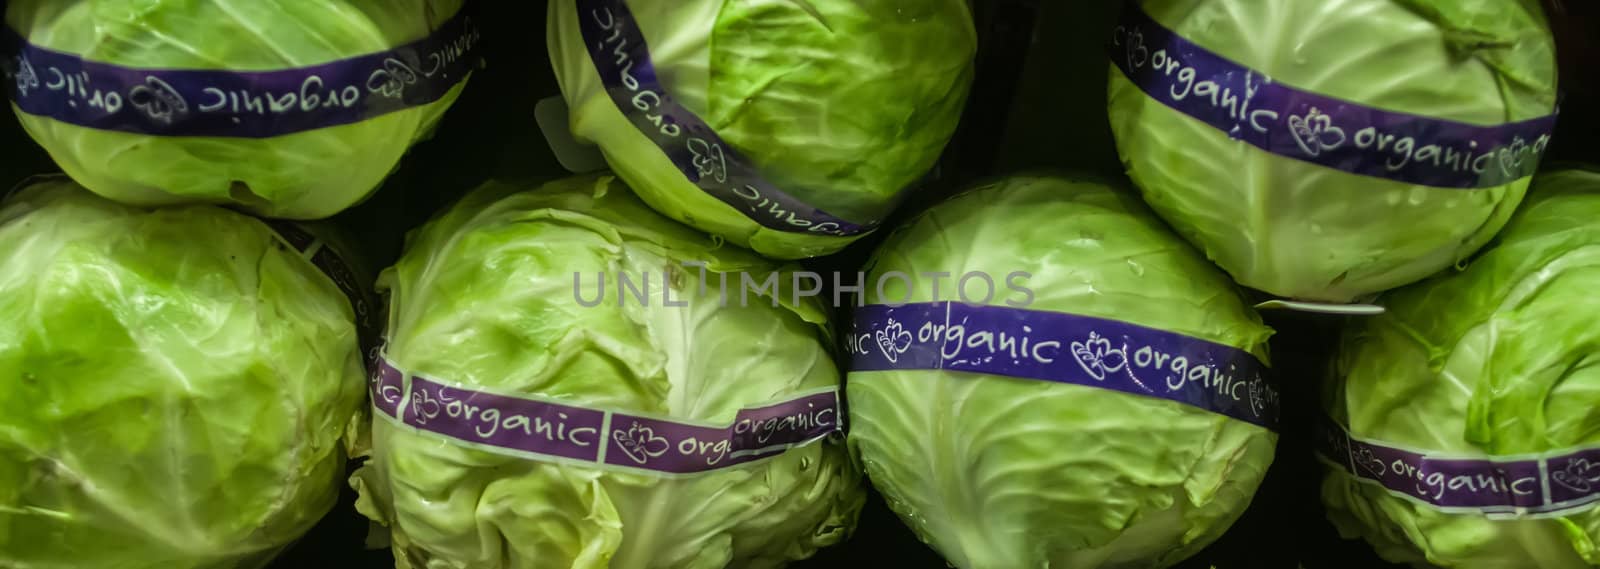 organic lettuce on display at farmers market